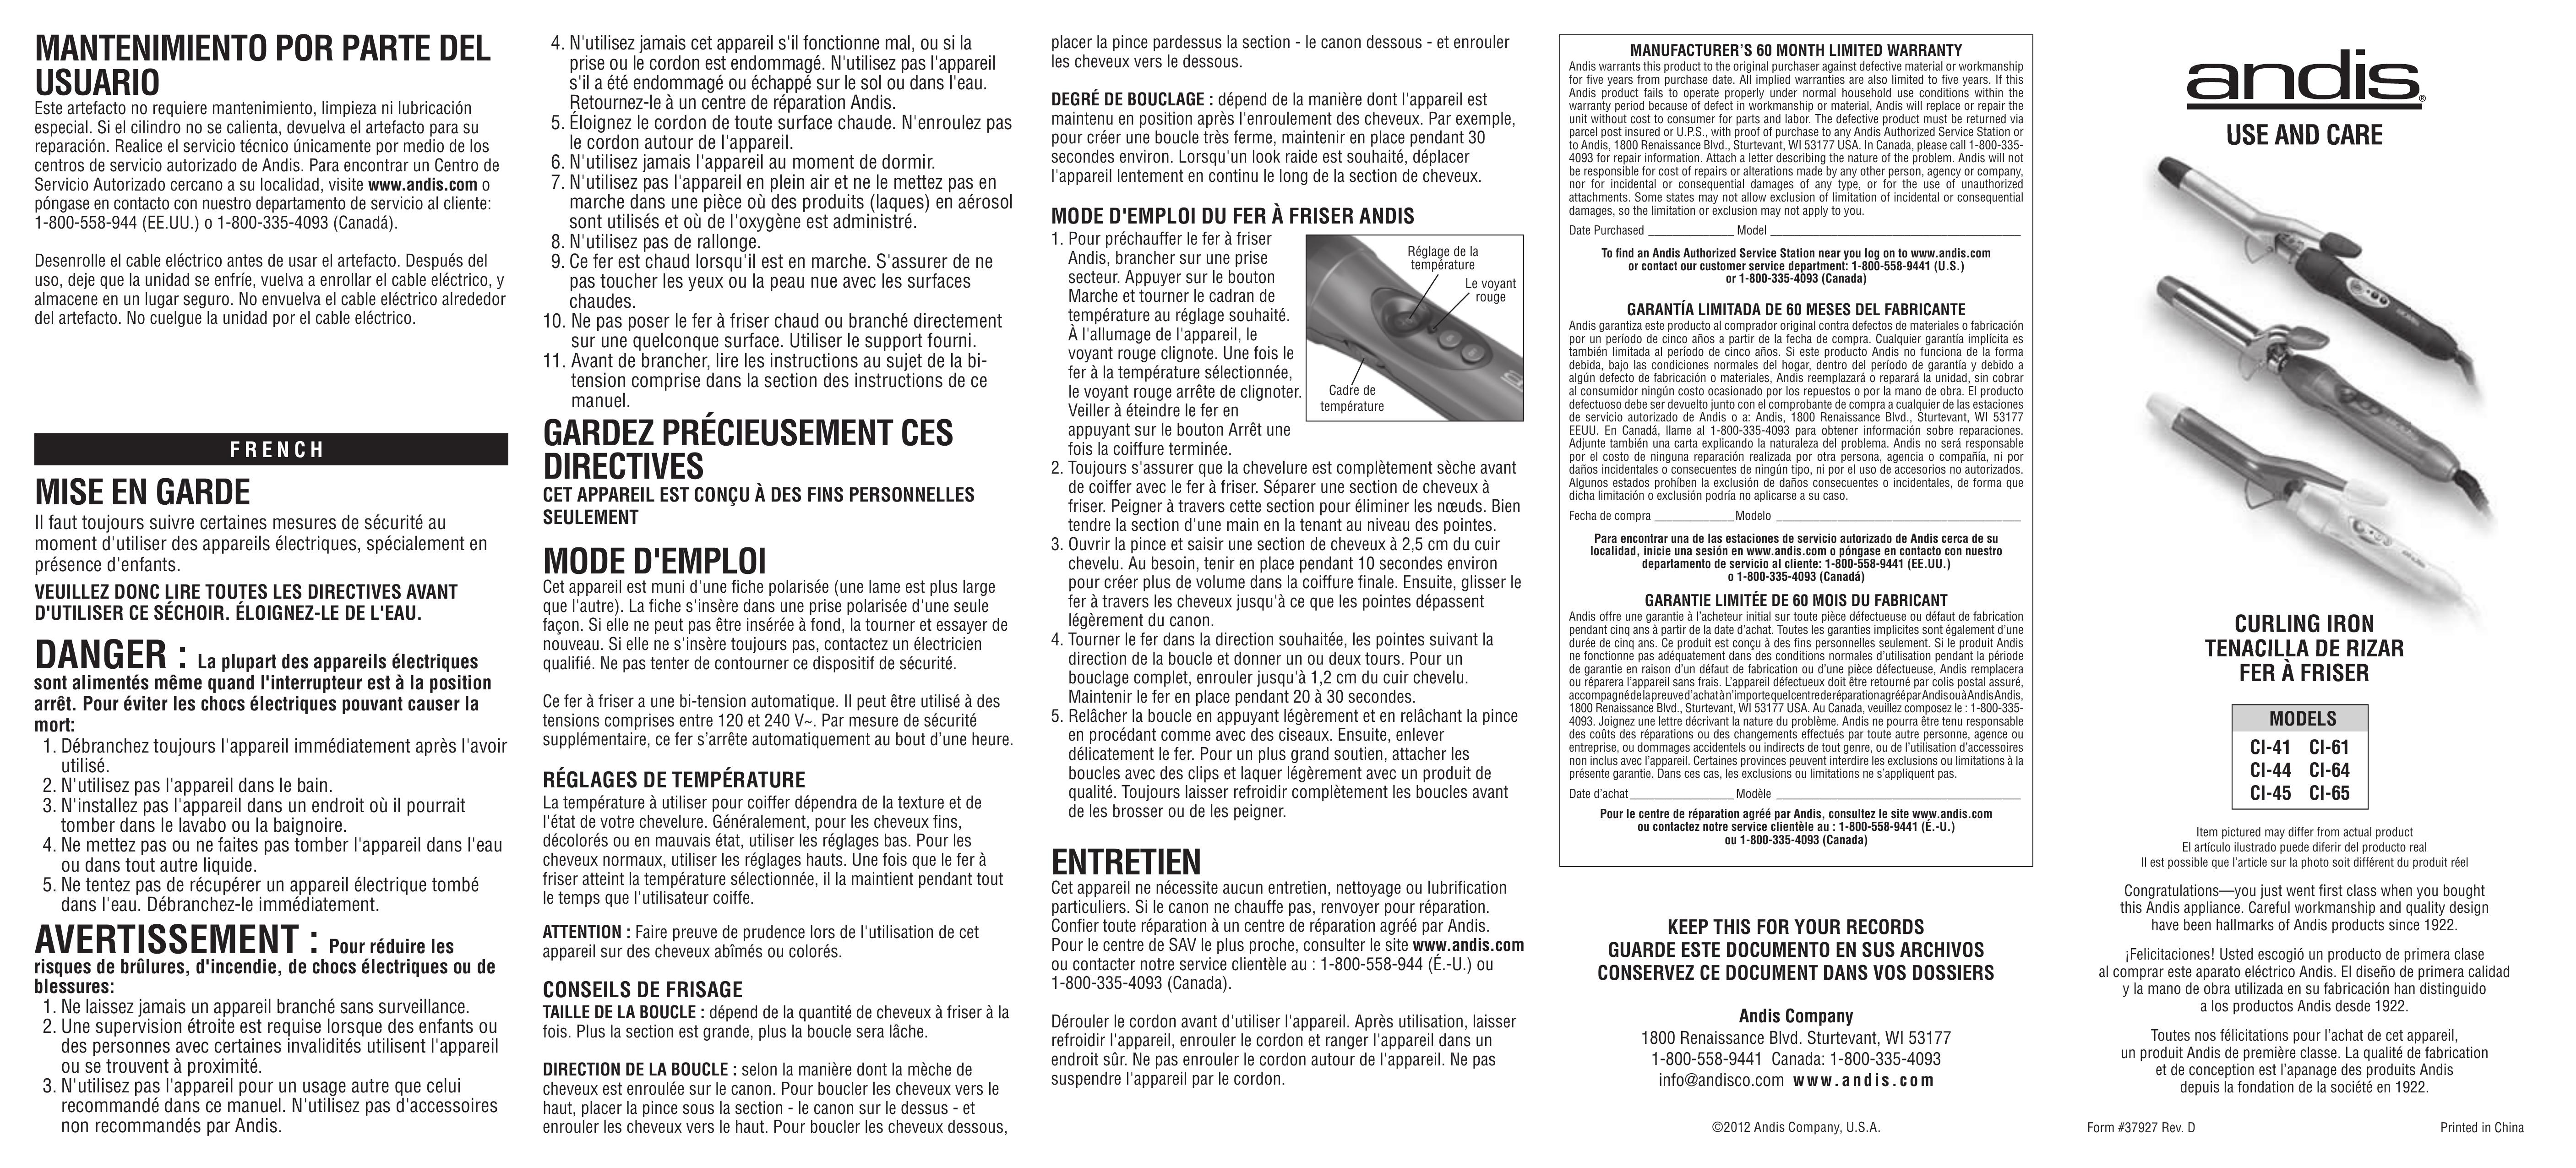 Andis Company CI-61 Styling Iron User Manual